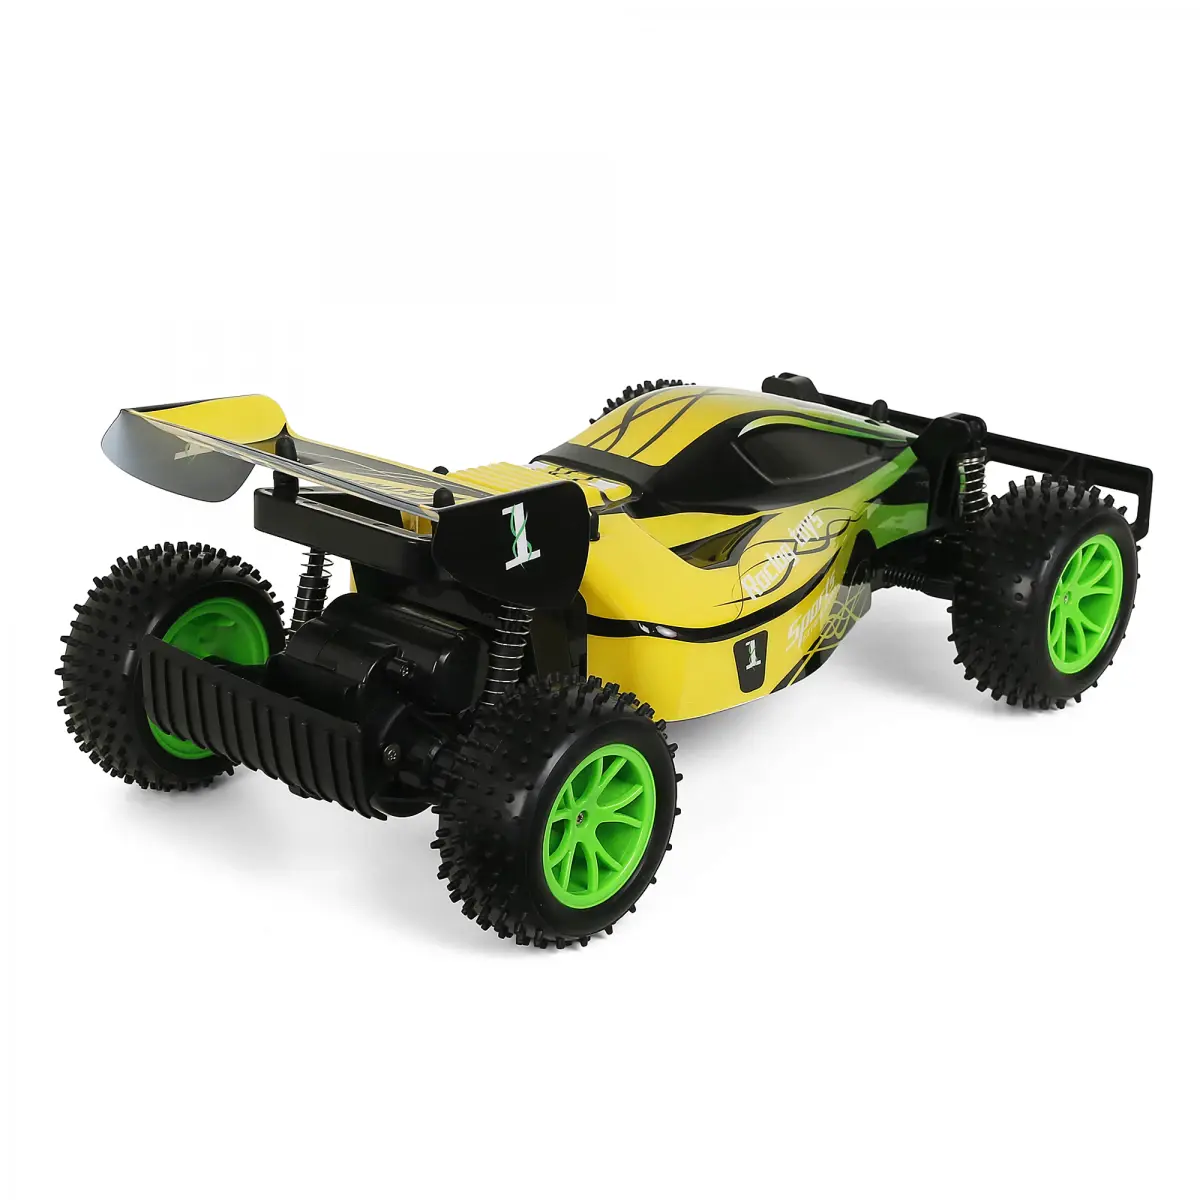 Ralleyz Remote Control Buggy Rocking Sports Speed Car, 3Y+, Yellow